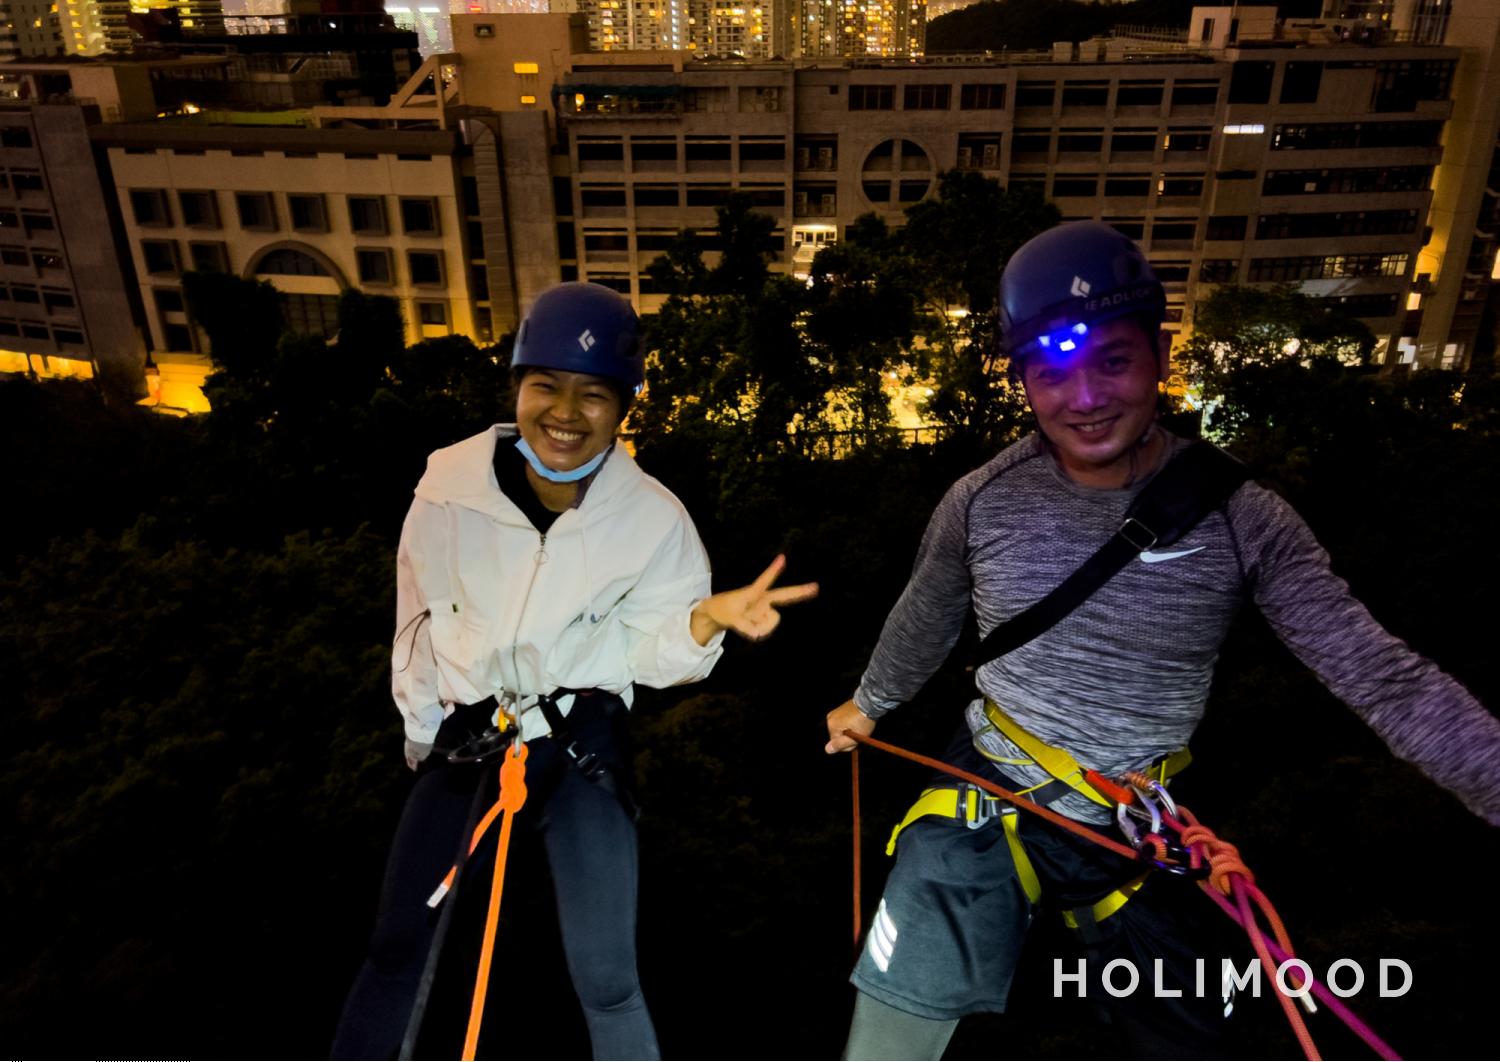 Explorer Hong Kong 【寶馬山】沿繩下降及攀岩 體驗 4